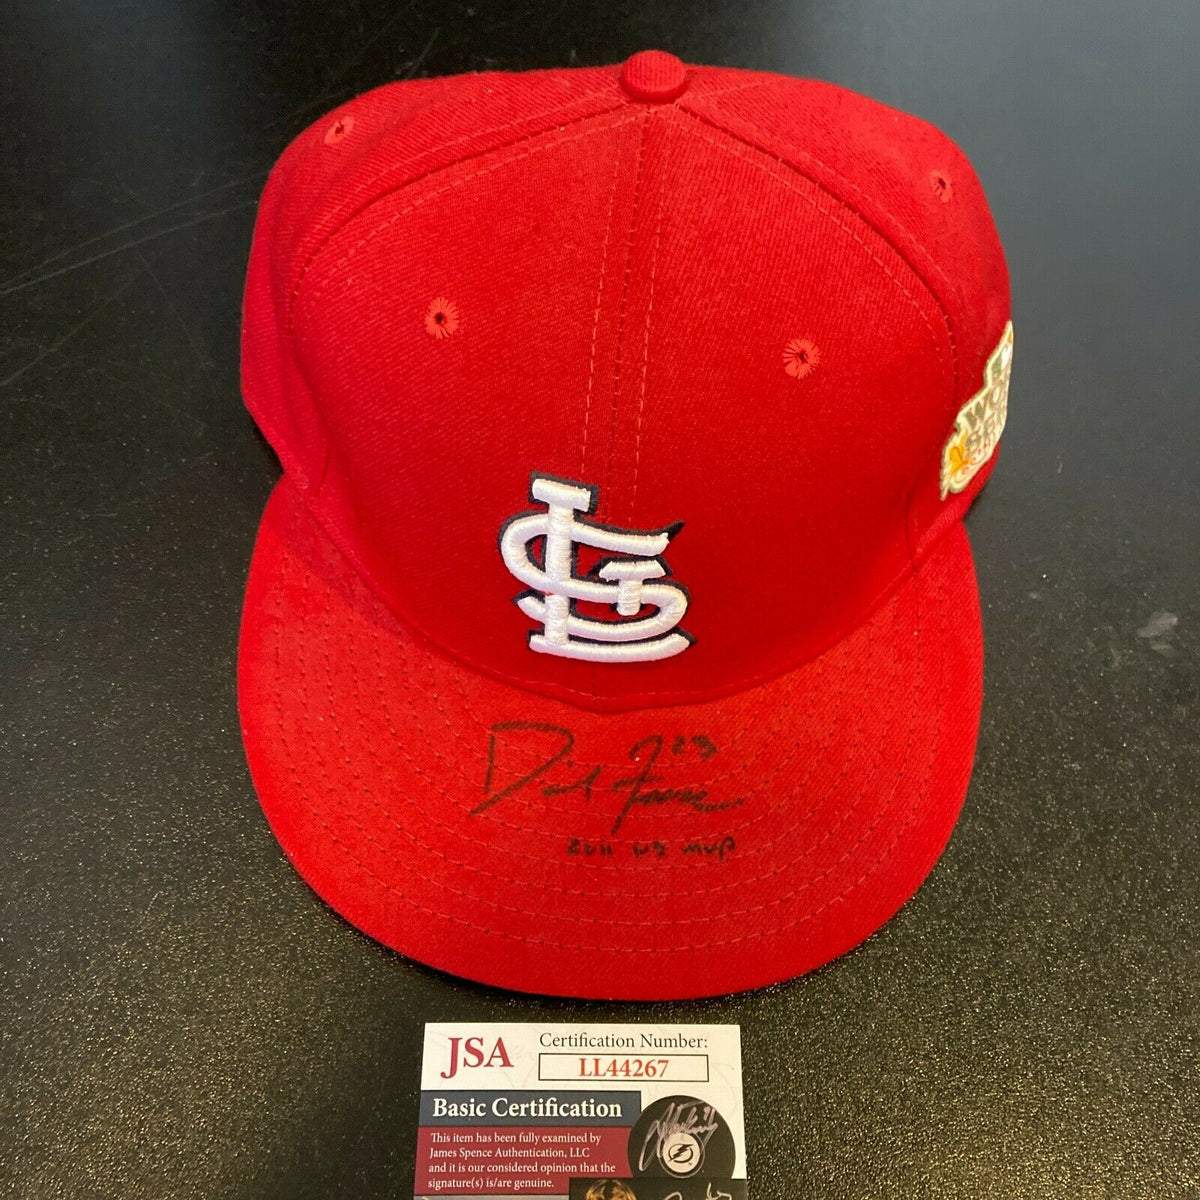 Brimfield man finds autographed 2011 World Series hat